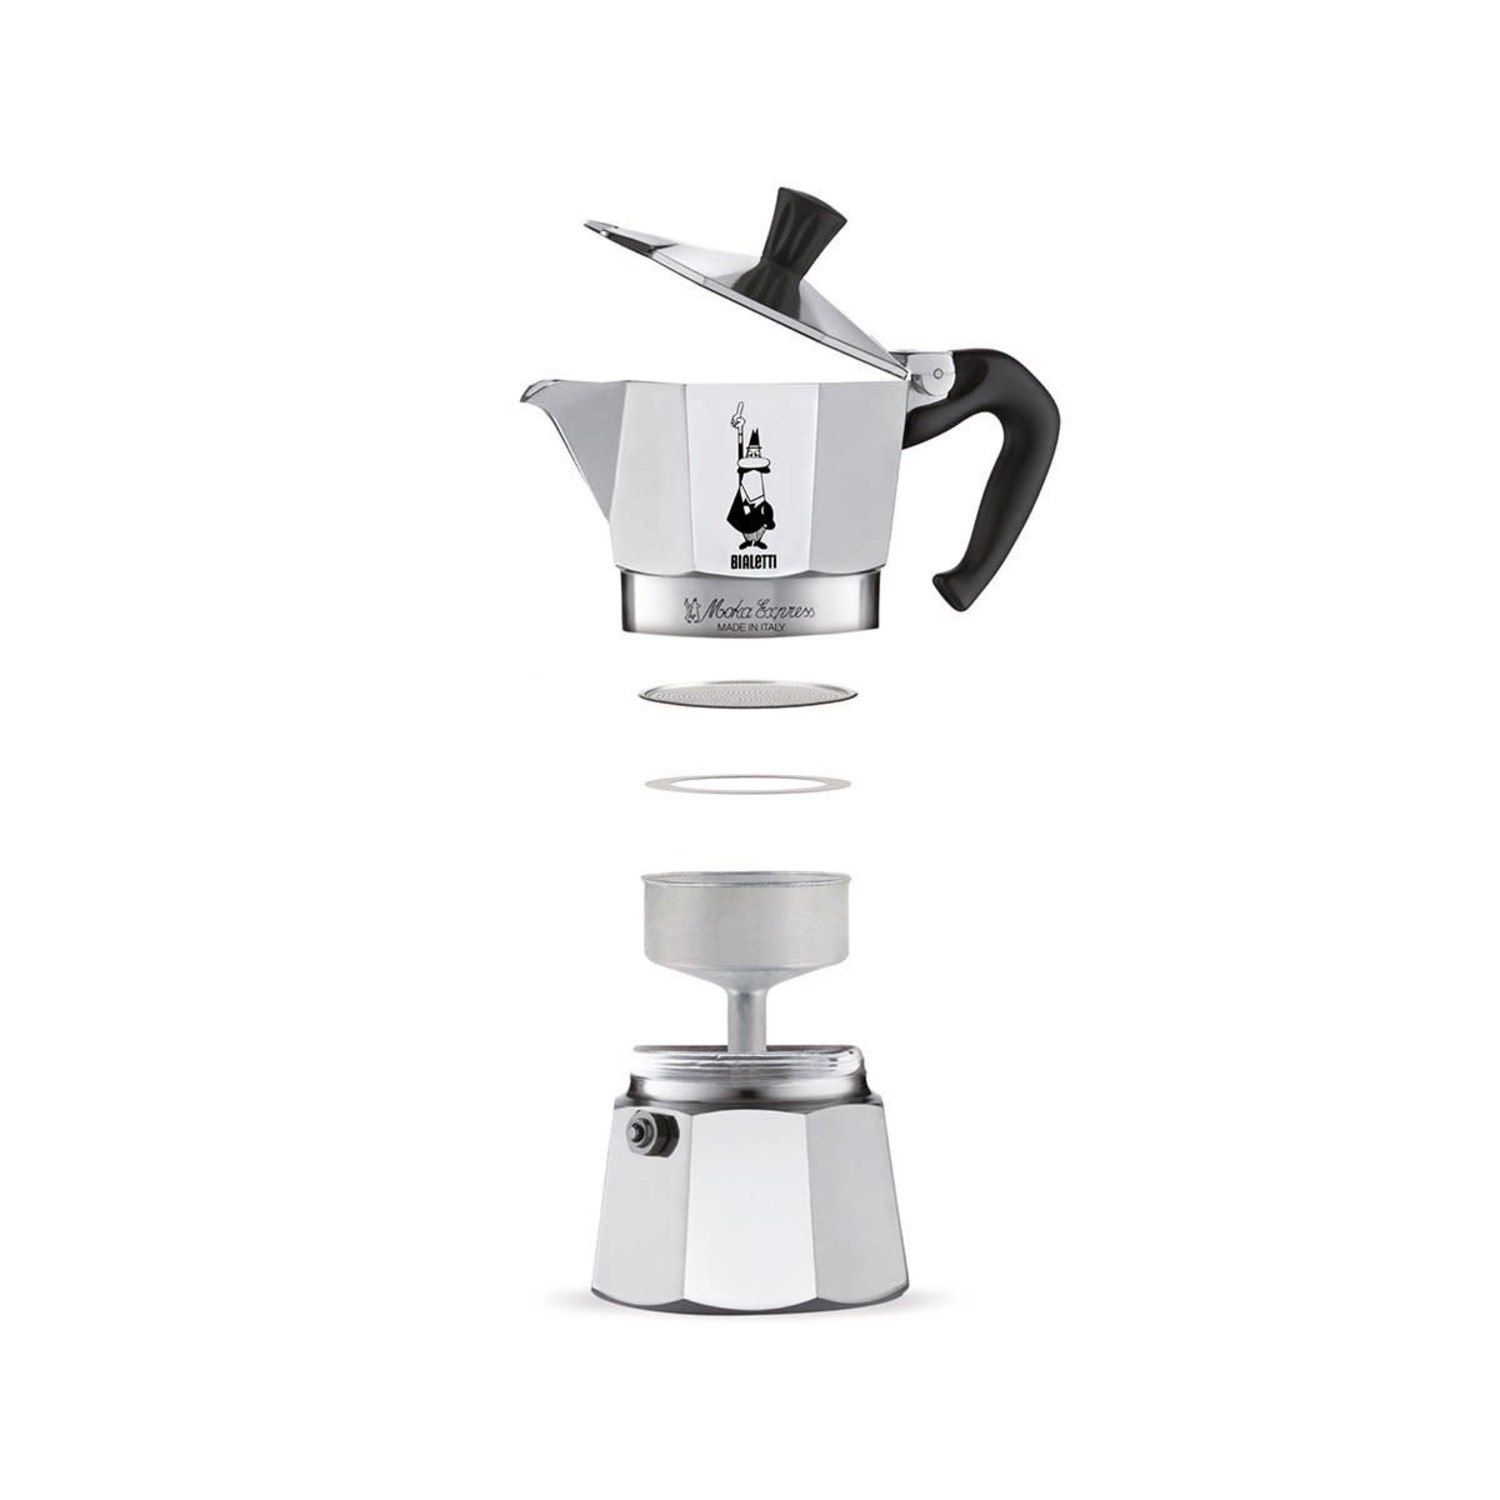 https://cdn.shoplightspeed.com/shops/633447/files/18301522/1500x4000x3/bialetti-moka-express-3-cup-espresso-maker.jpg